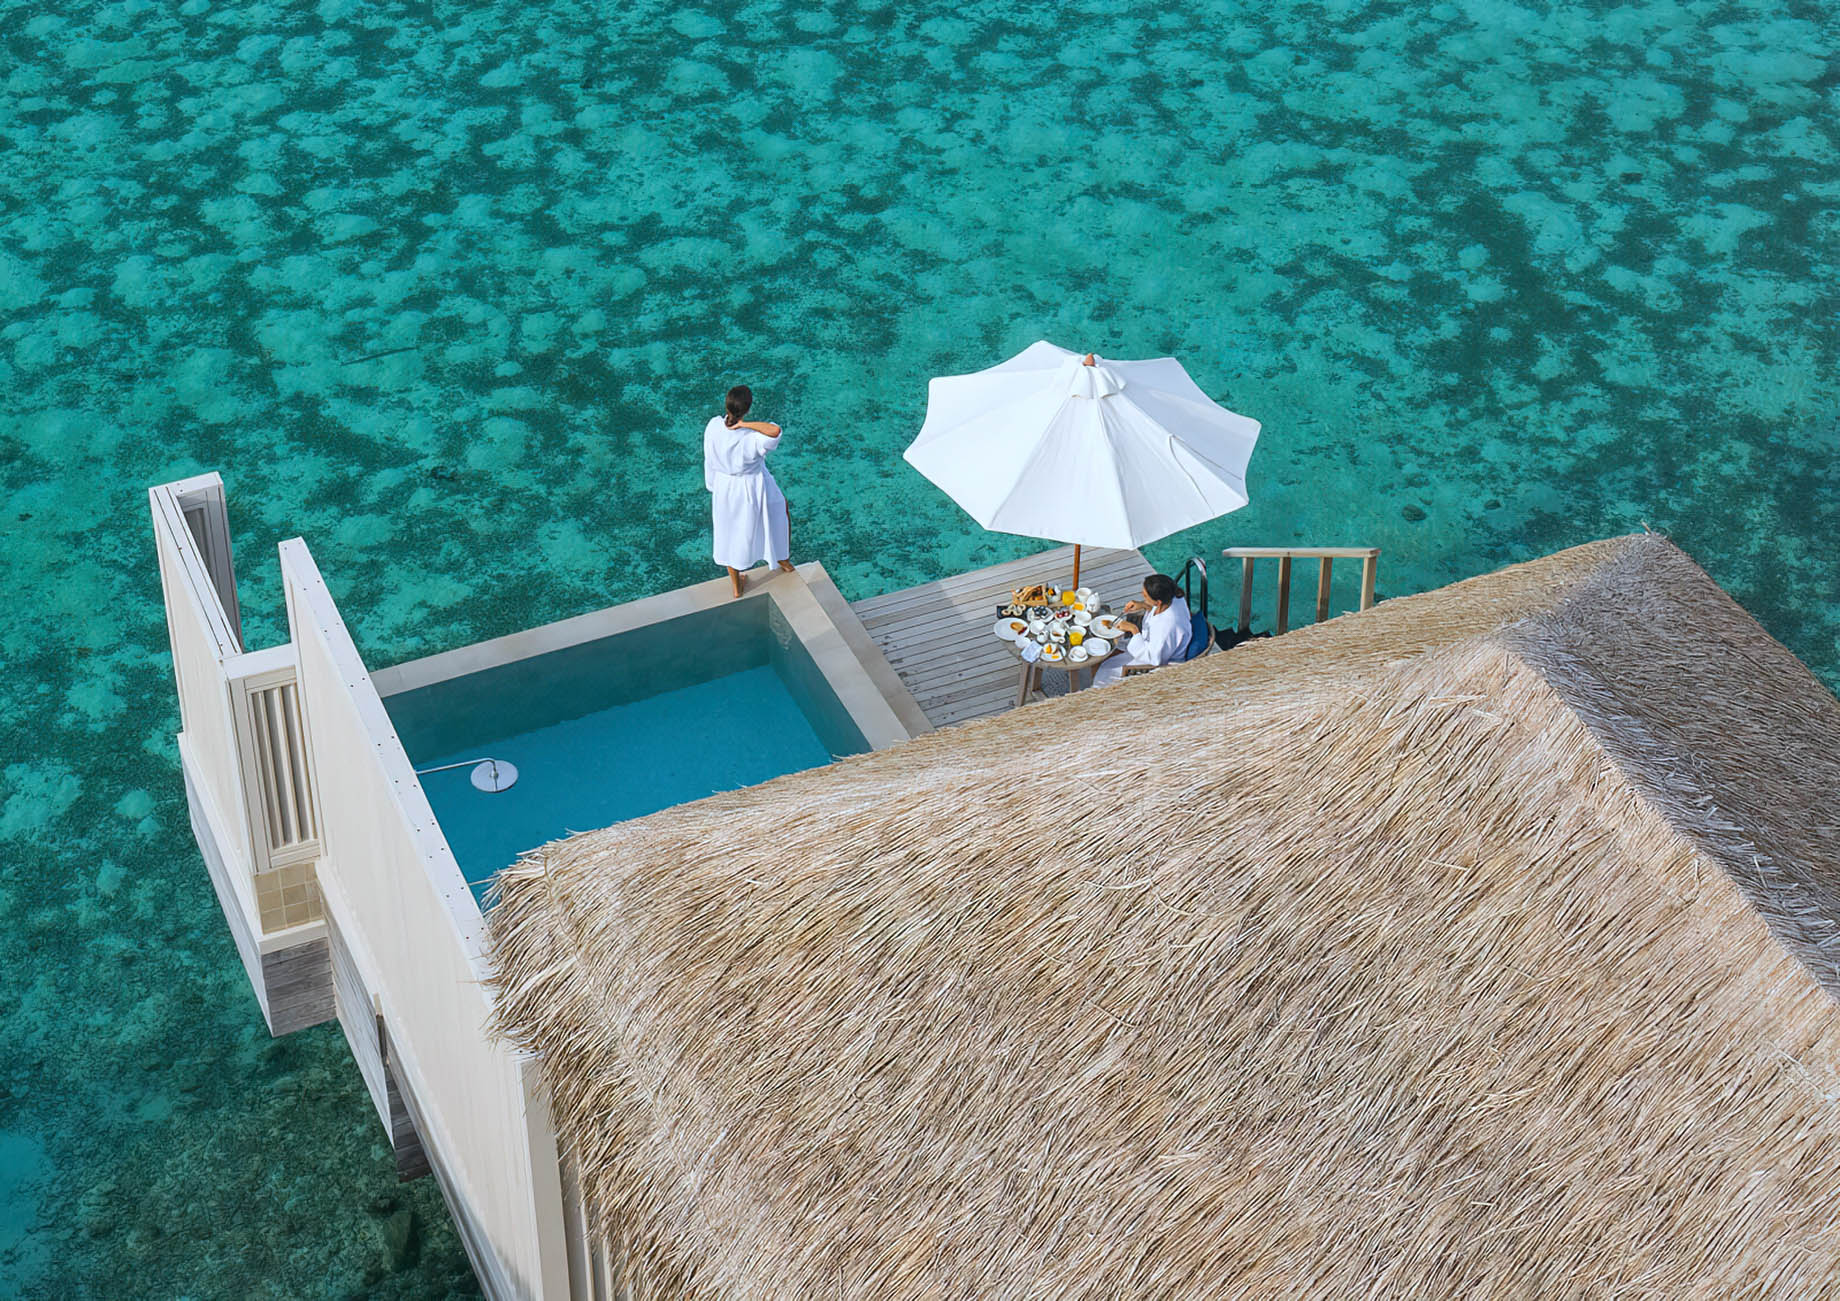 Baglioni Resort Maldives - Maagau Island, Rinbudhoo, Maldives - Pool Water Villa Aerial View